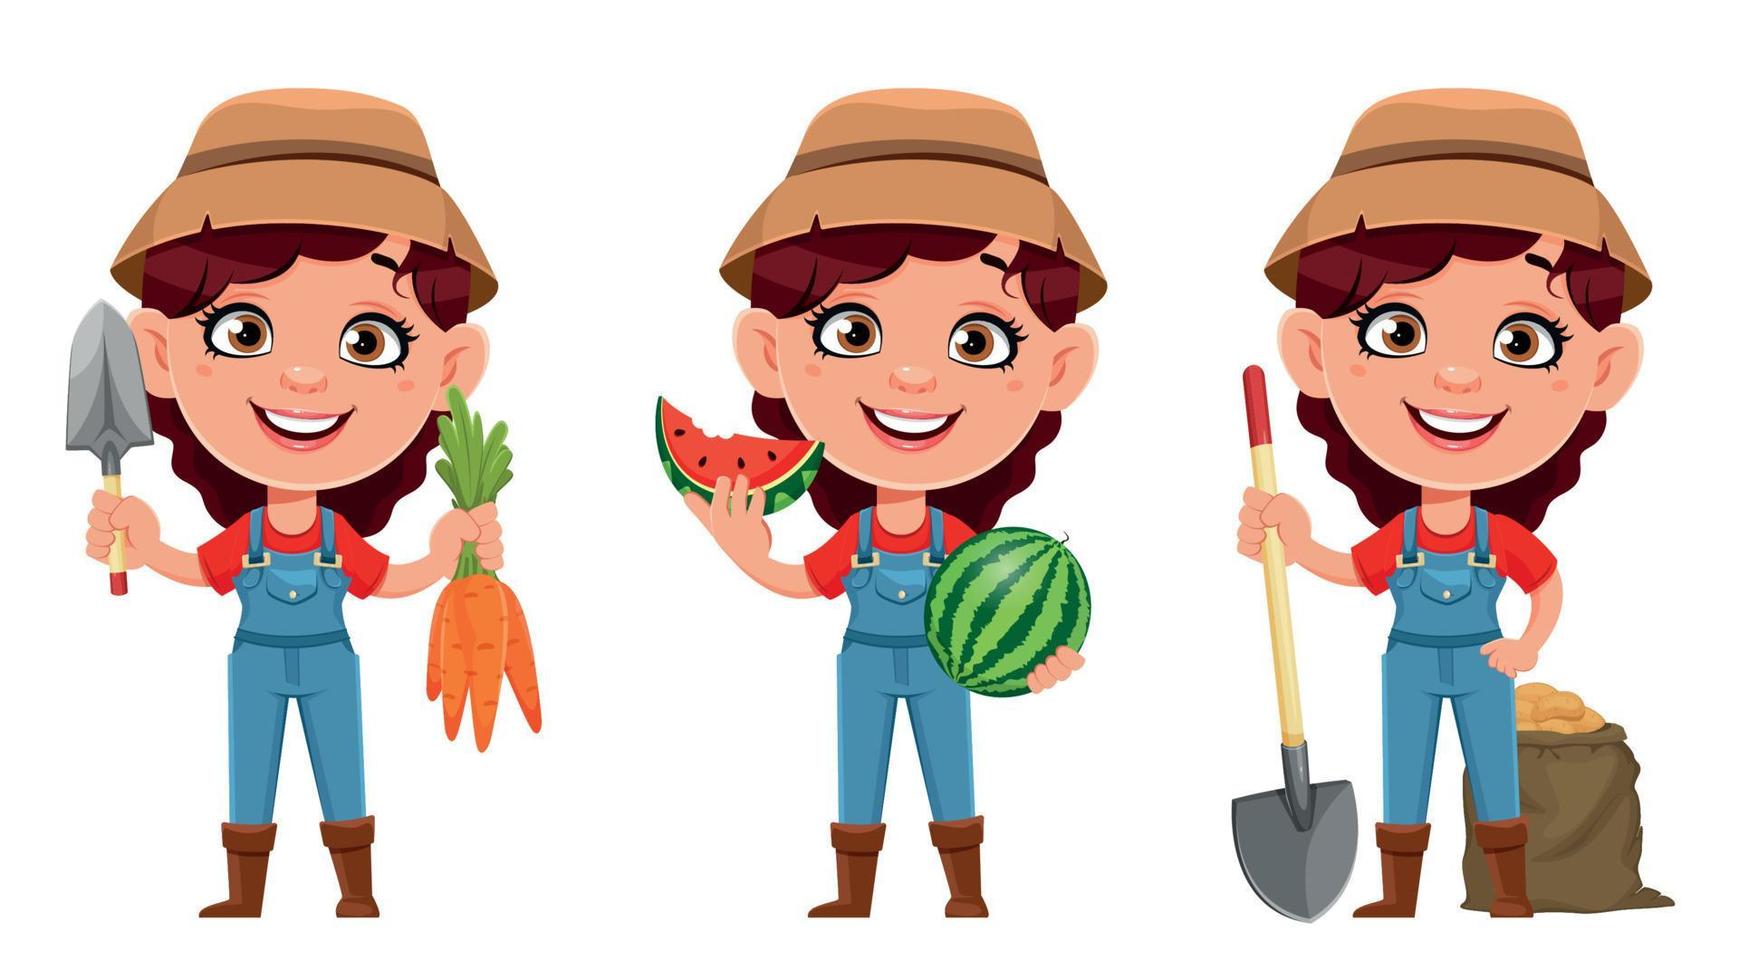 Farmer woman cartoon character, set of three poses vector